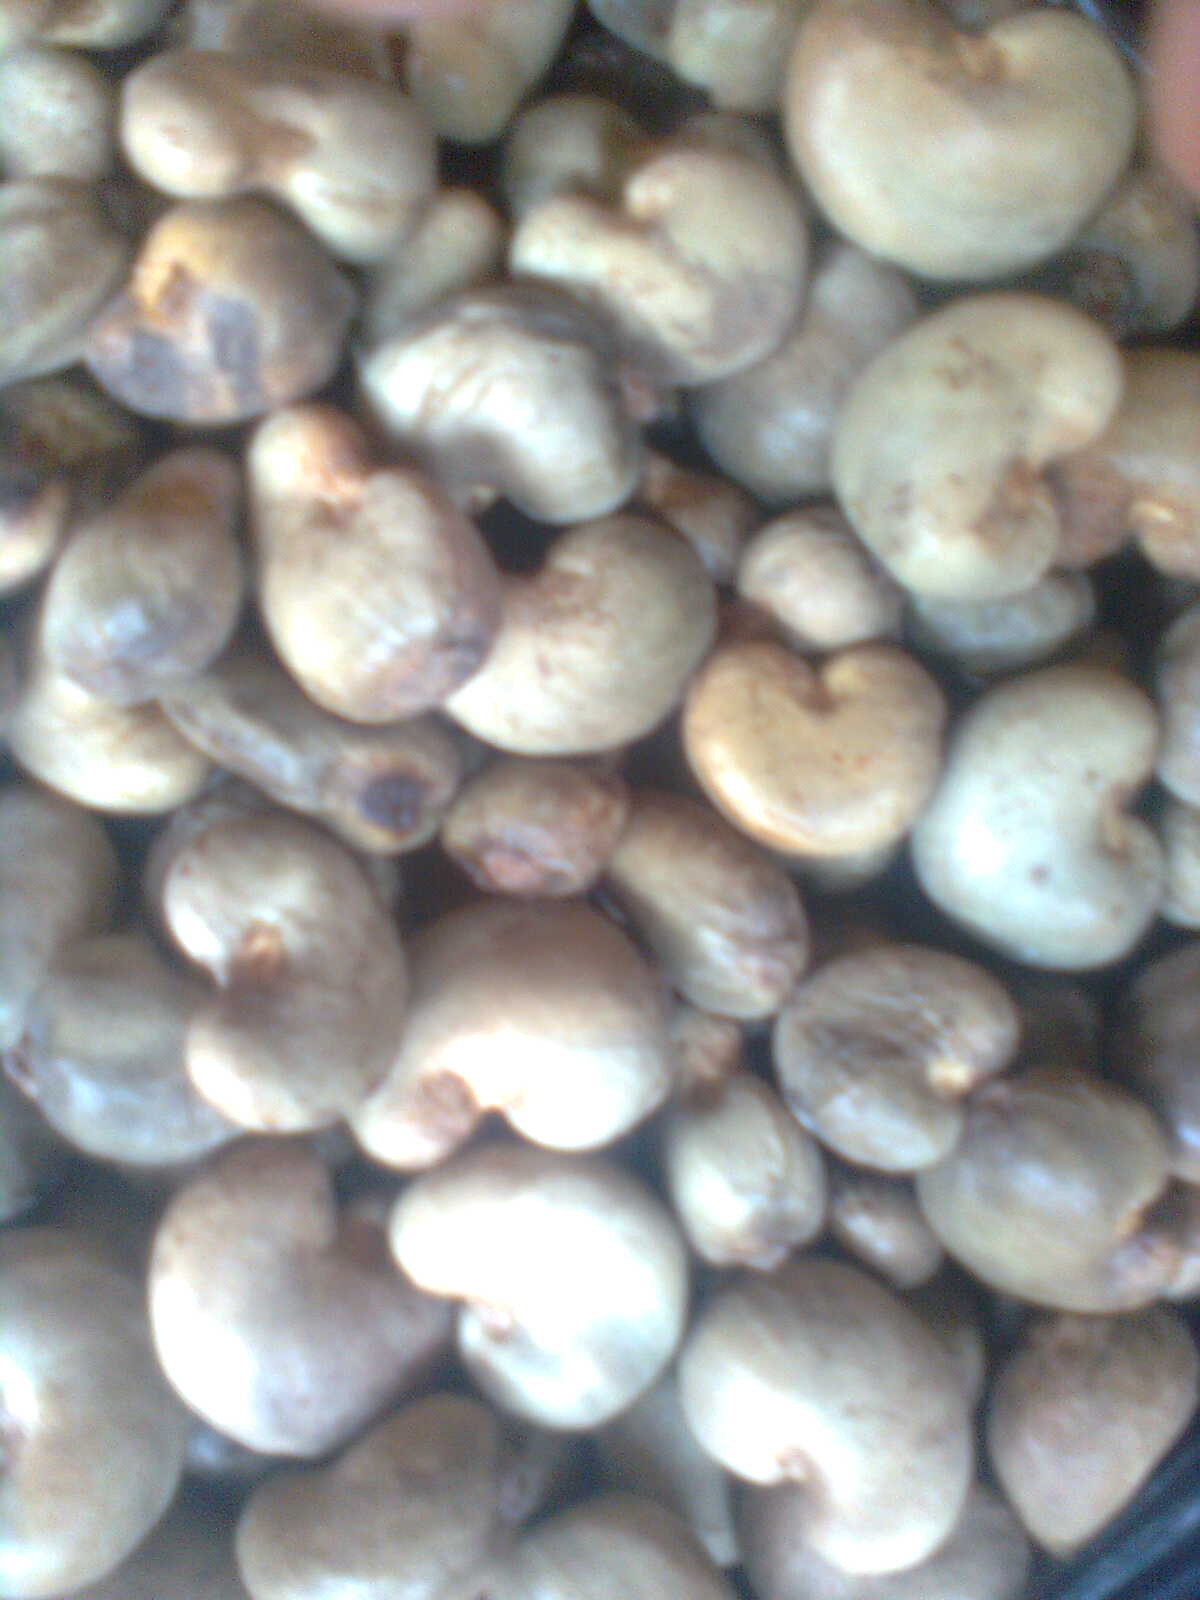 will cashew nuts make me fat